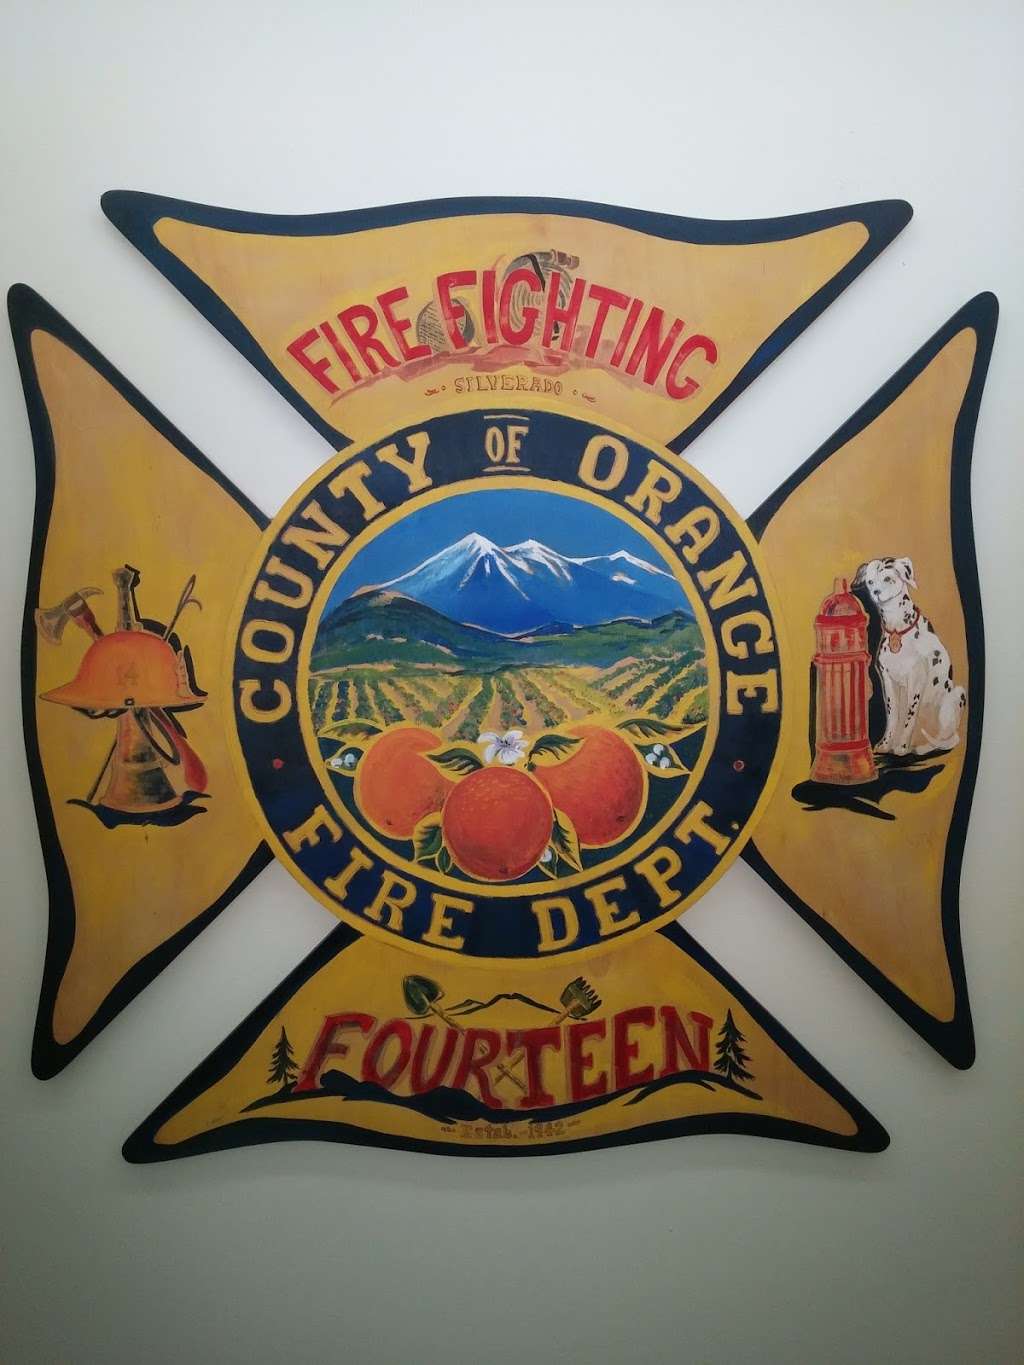 Orange County Fire Authority Station #14 | 29402 Silverado Canyon Rd, Silverado, CA 92676